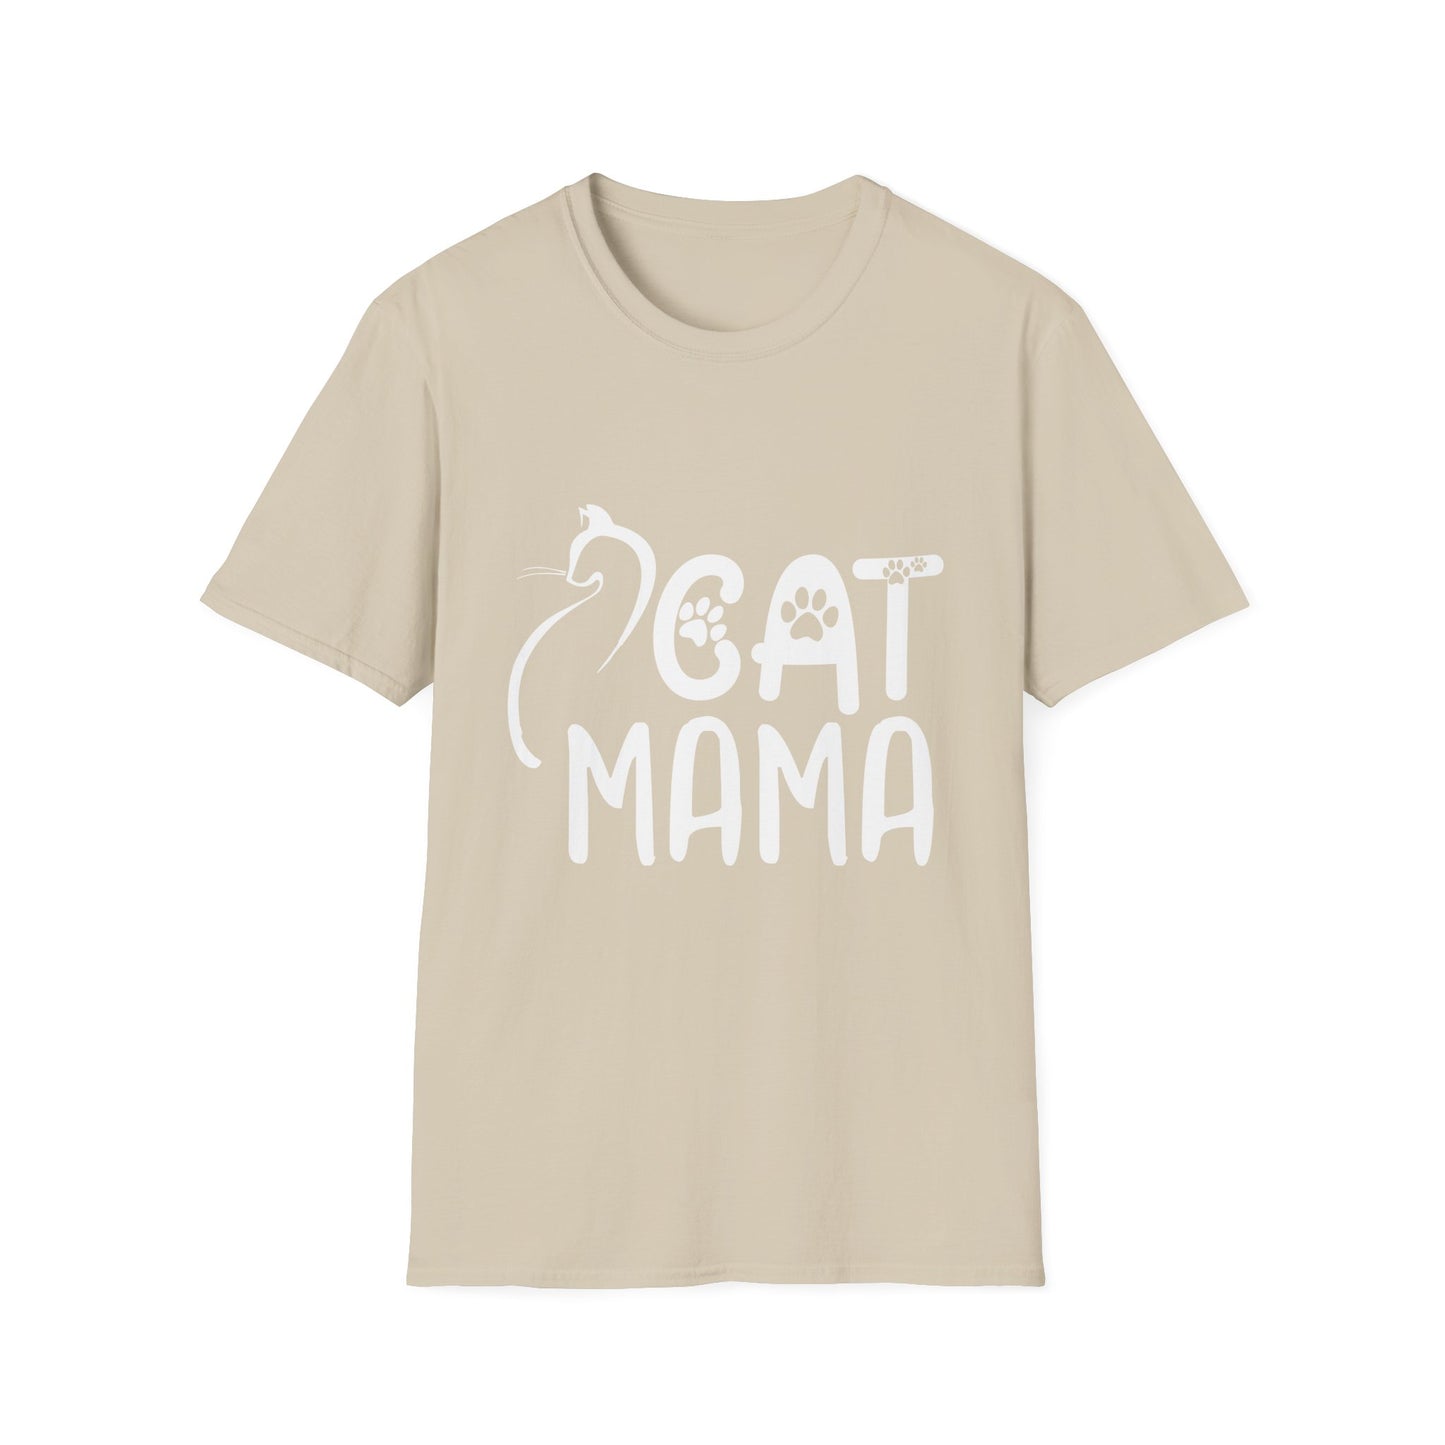 Cat Mamat Cat T-Shirts for Feline-loving Fashionistas!